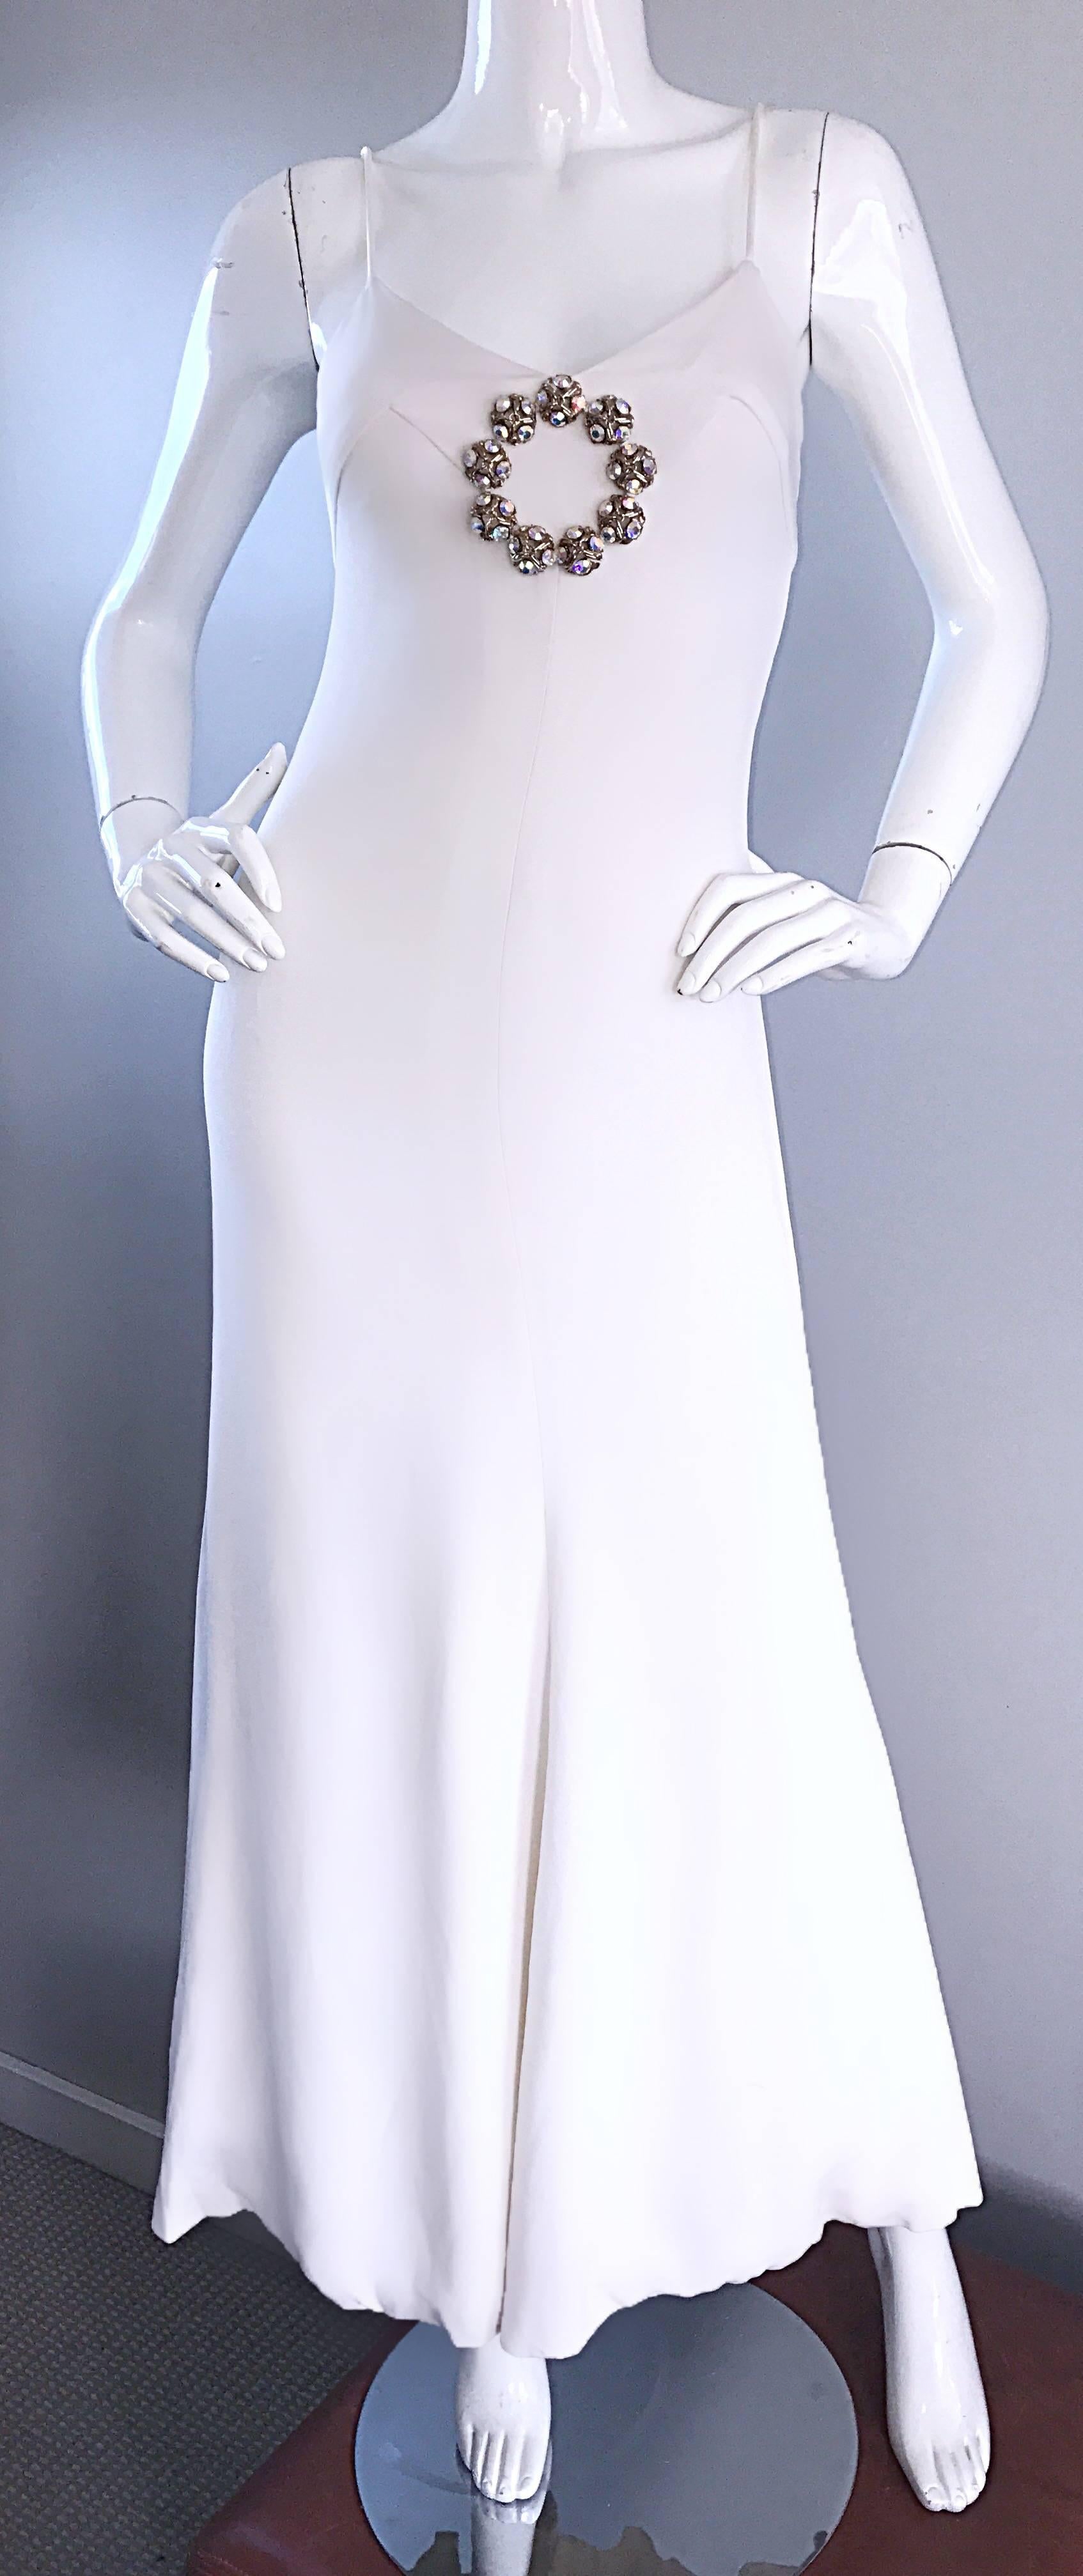 Women's Oscar de la Renta 1970s Exceptional Vintage White Crepe Rhinestone Dress / Gown